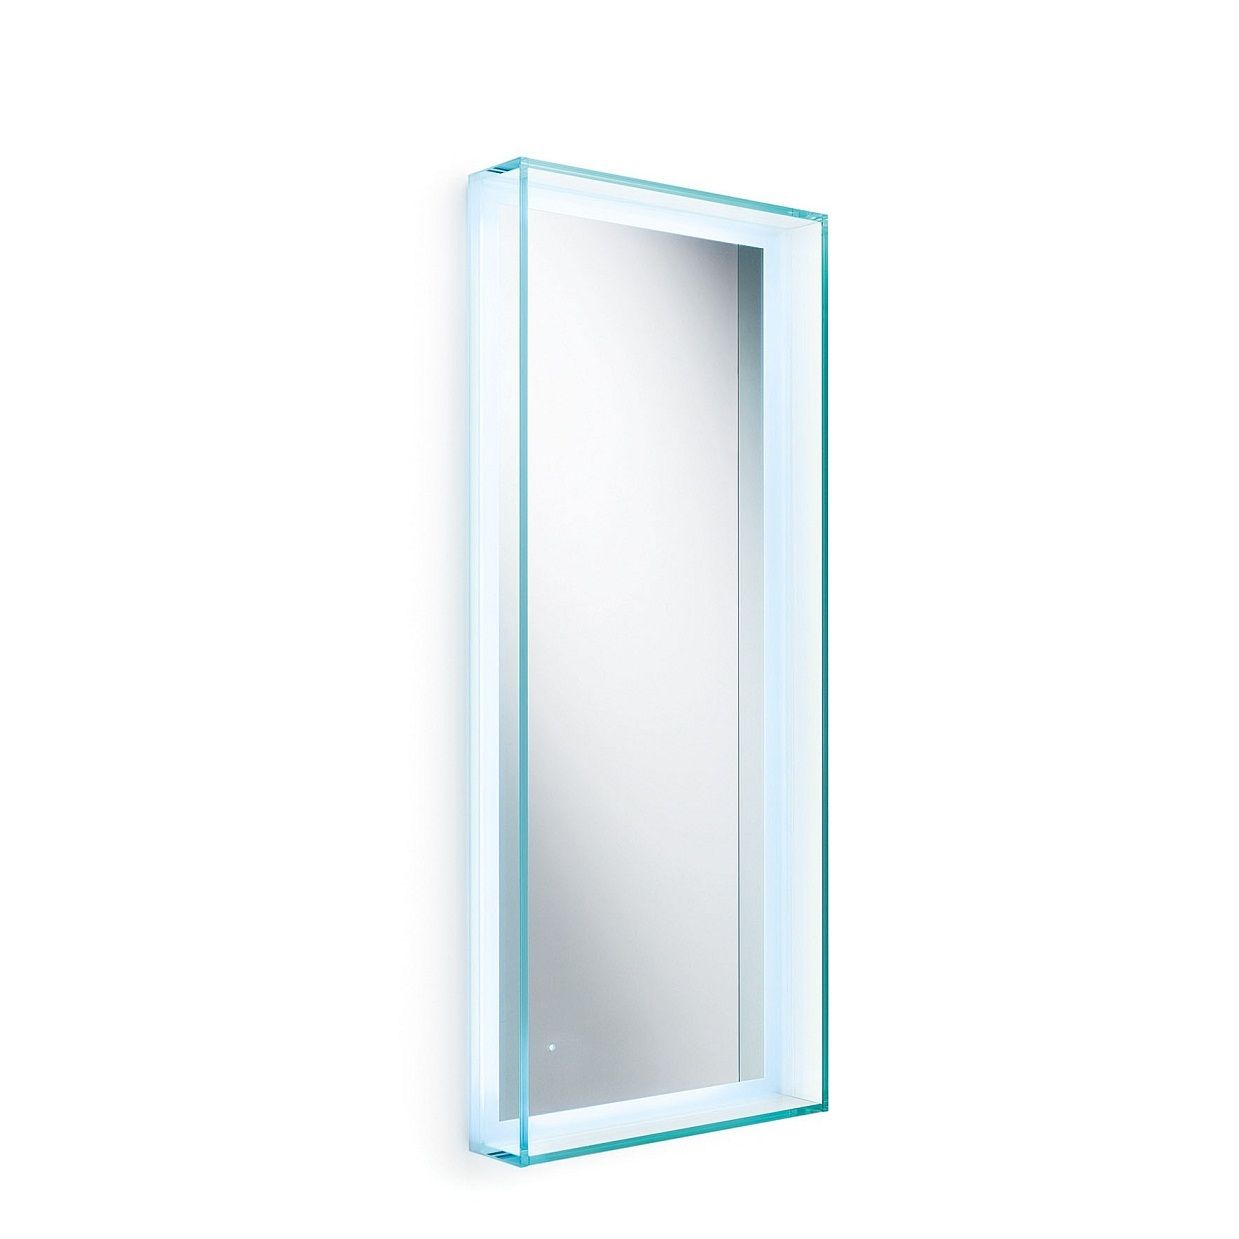 The Full Guide on Bathroom Mirror Frame Types